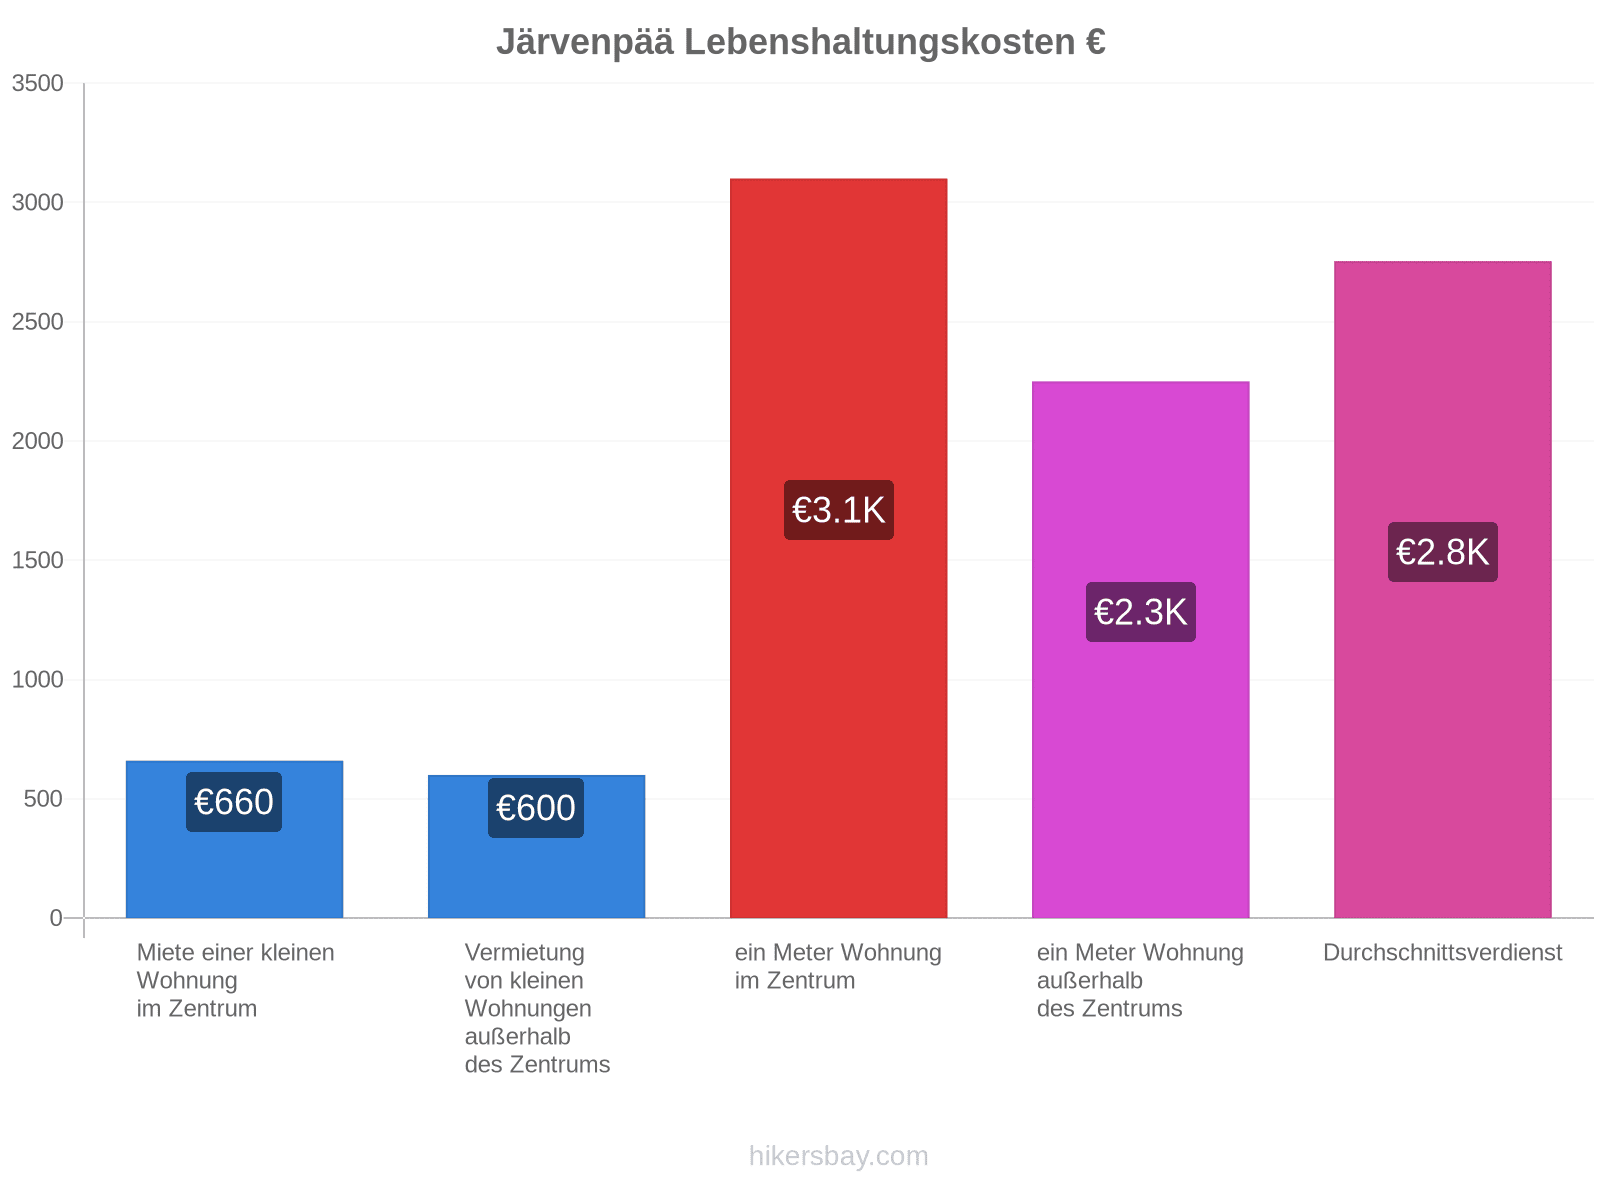 Järvenpää Lebenshaltungskosten hikersbay.com